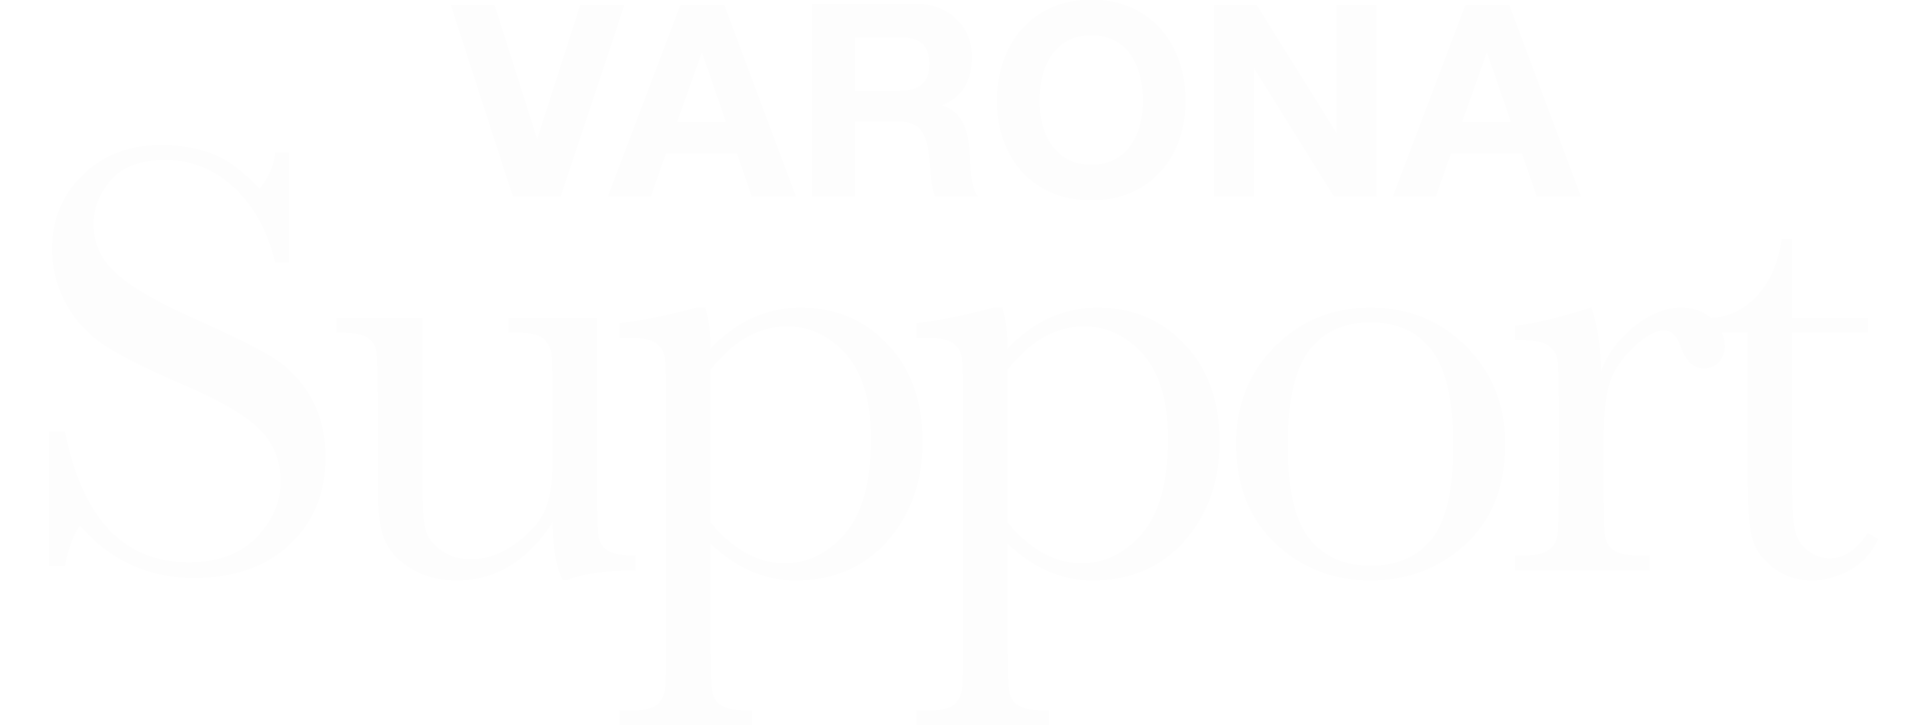 Varona Support